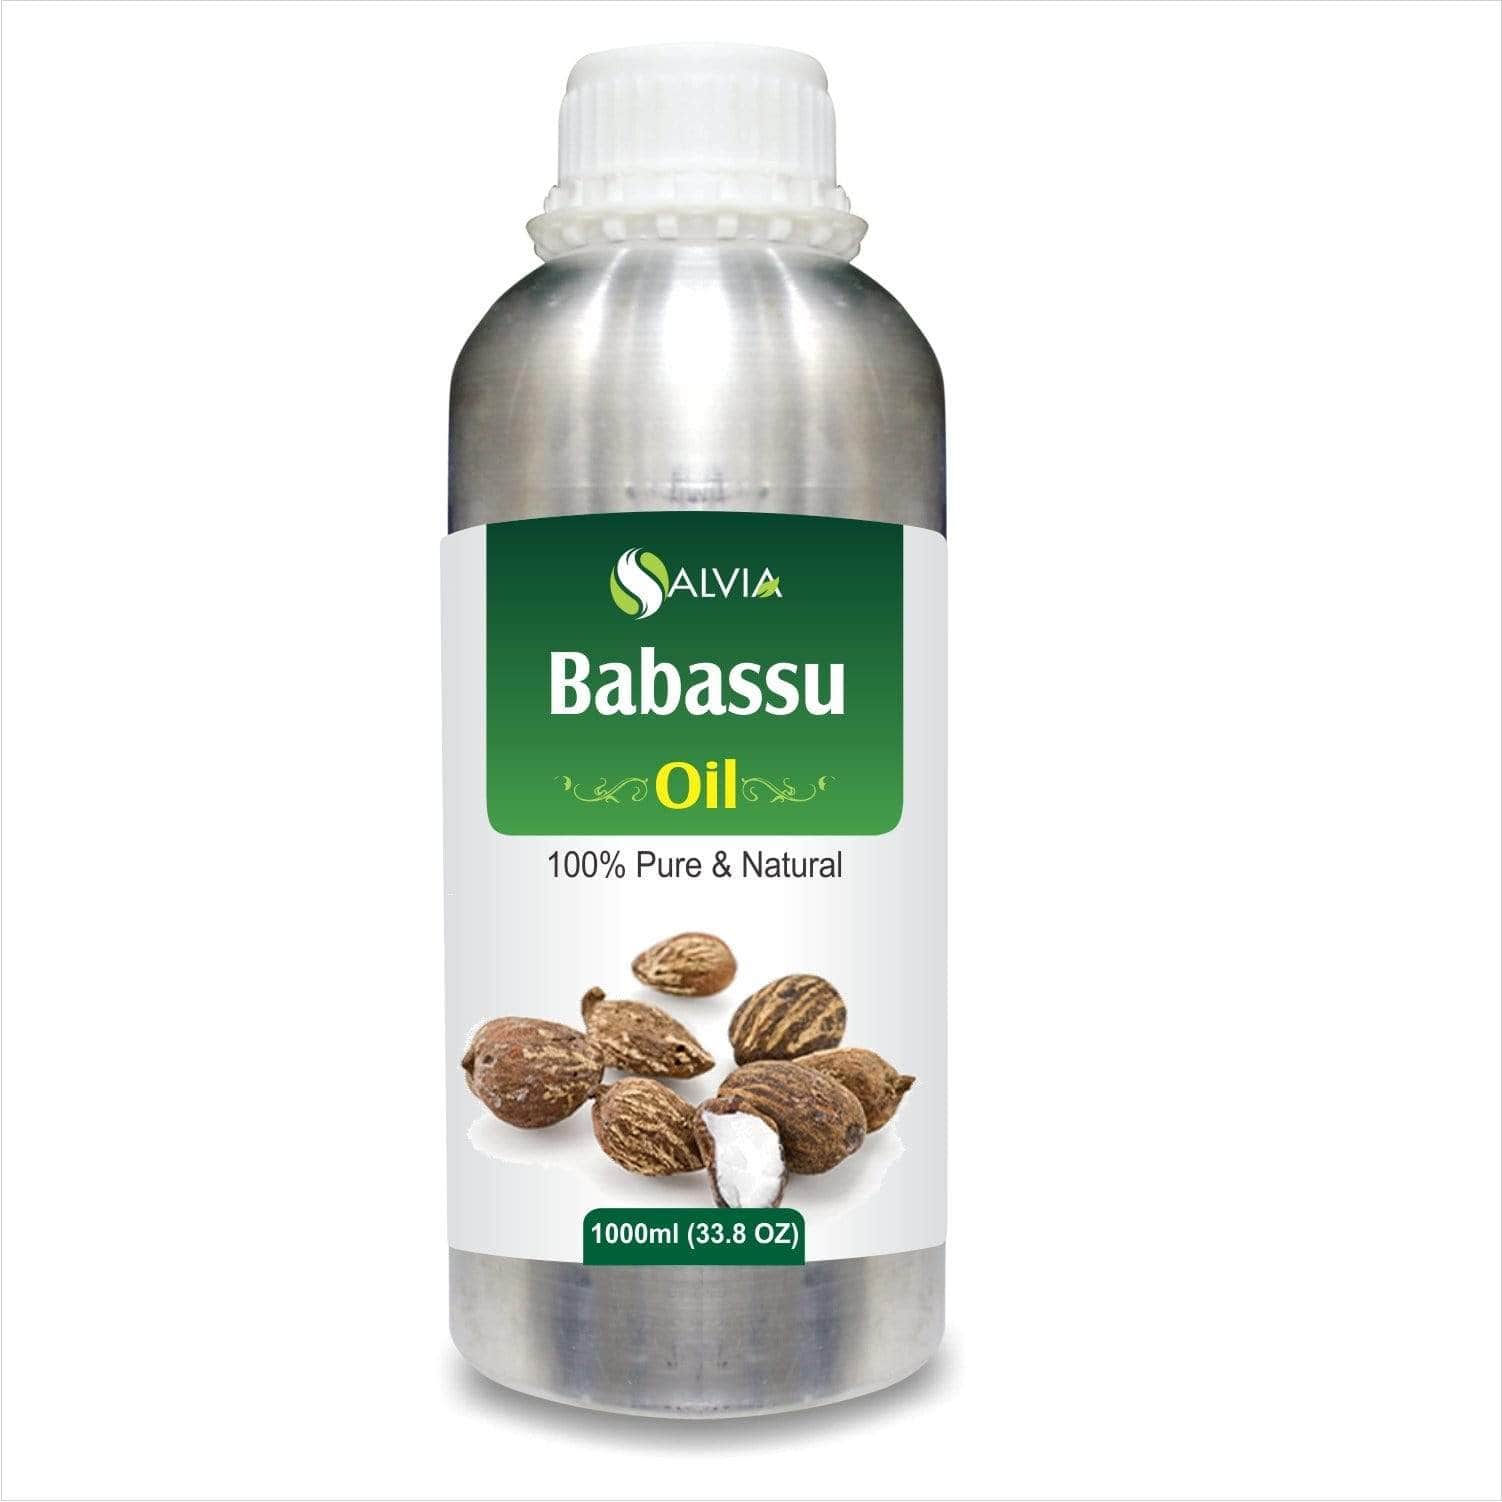 babassu oil benefits for skin